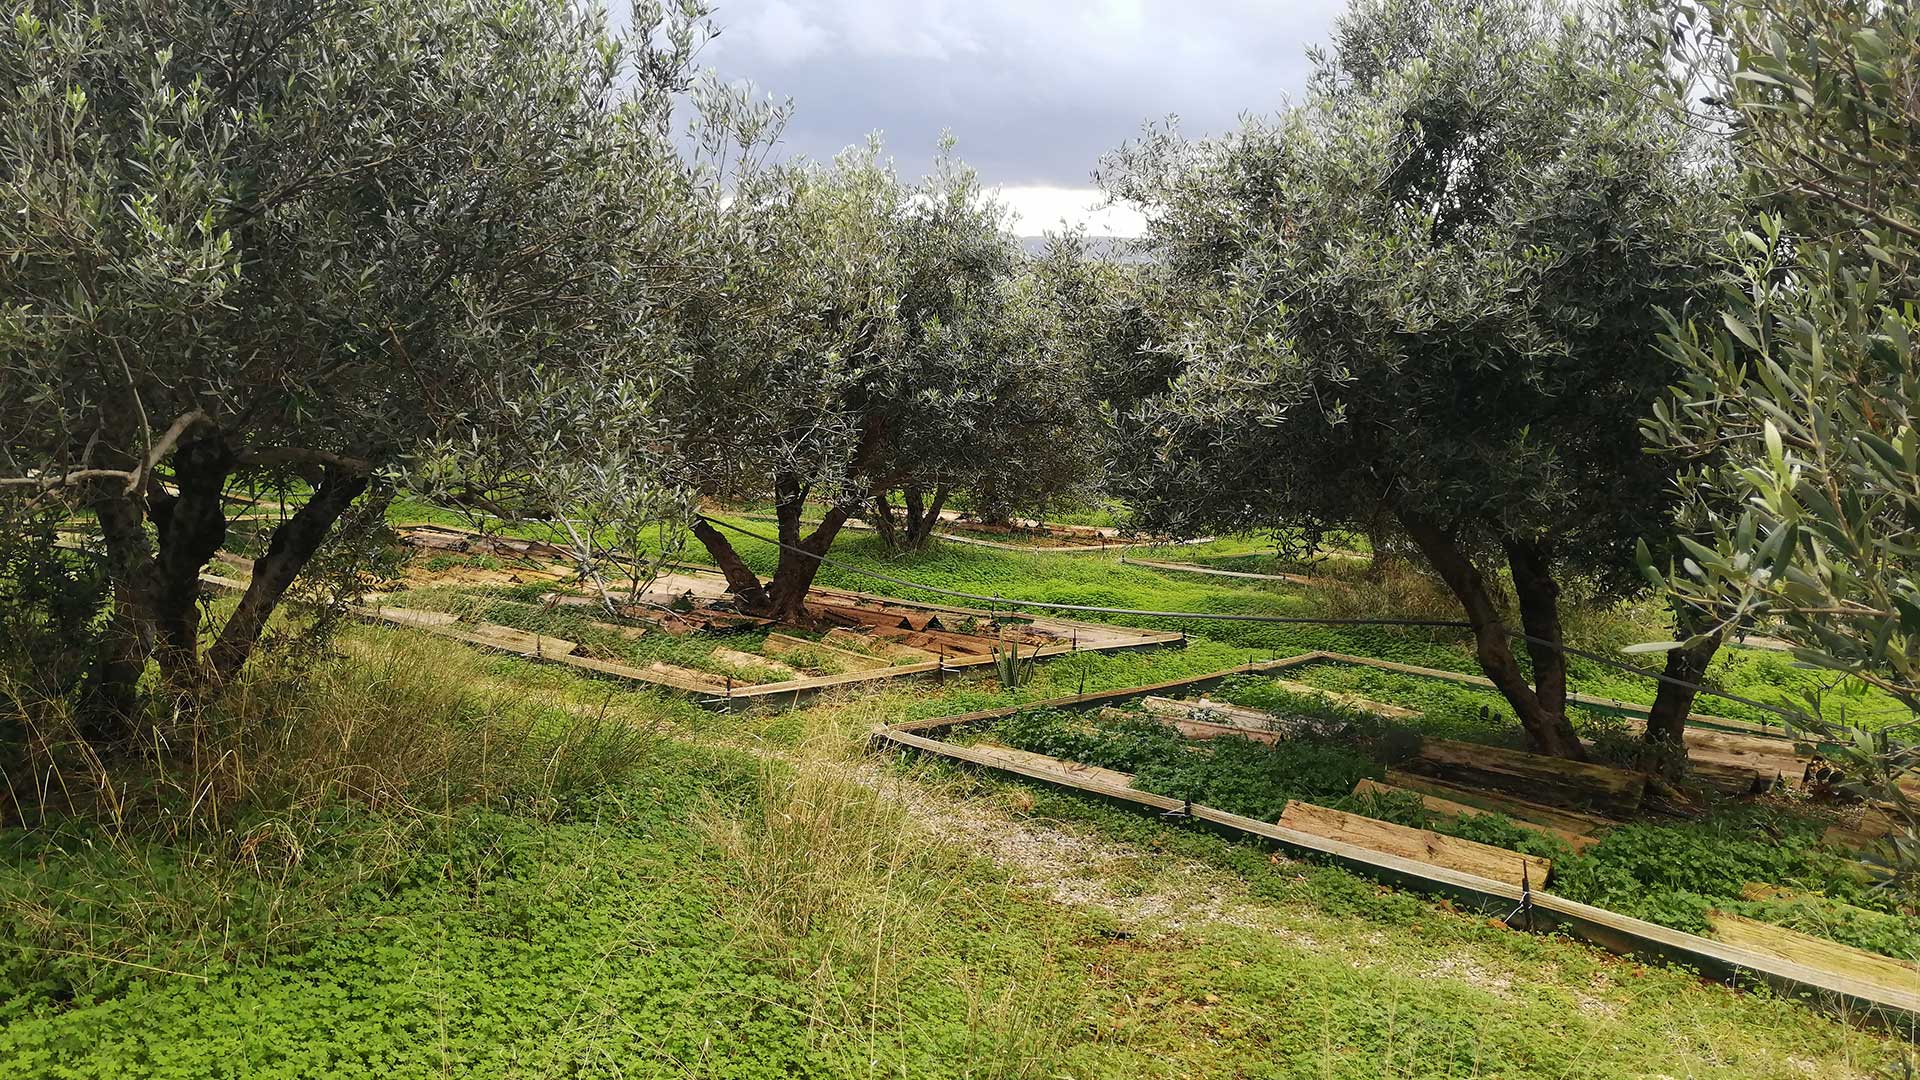 Ecological snail farming in organic olive trees of Escargot de Crete